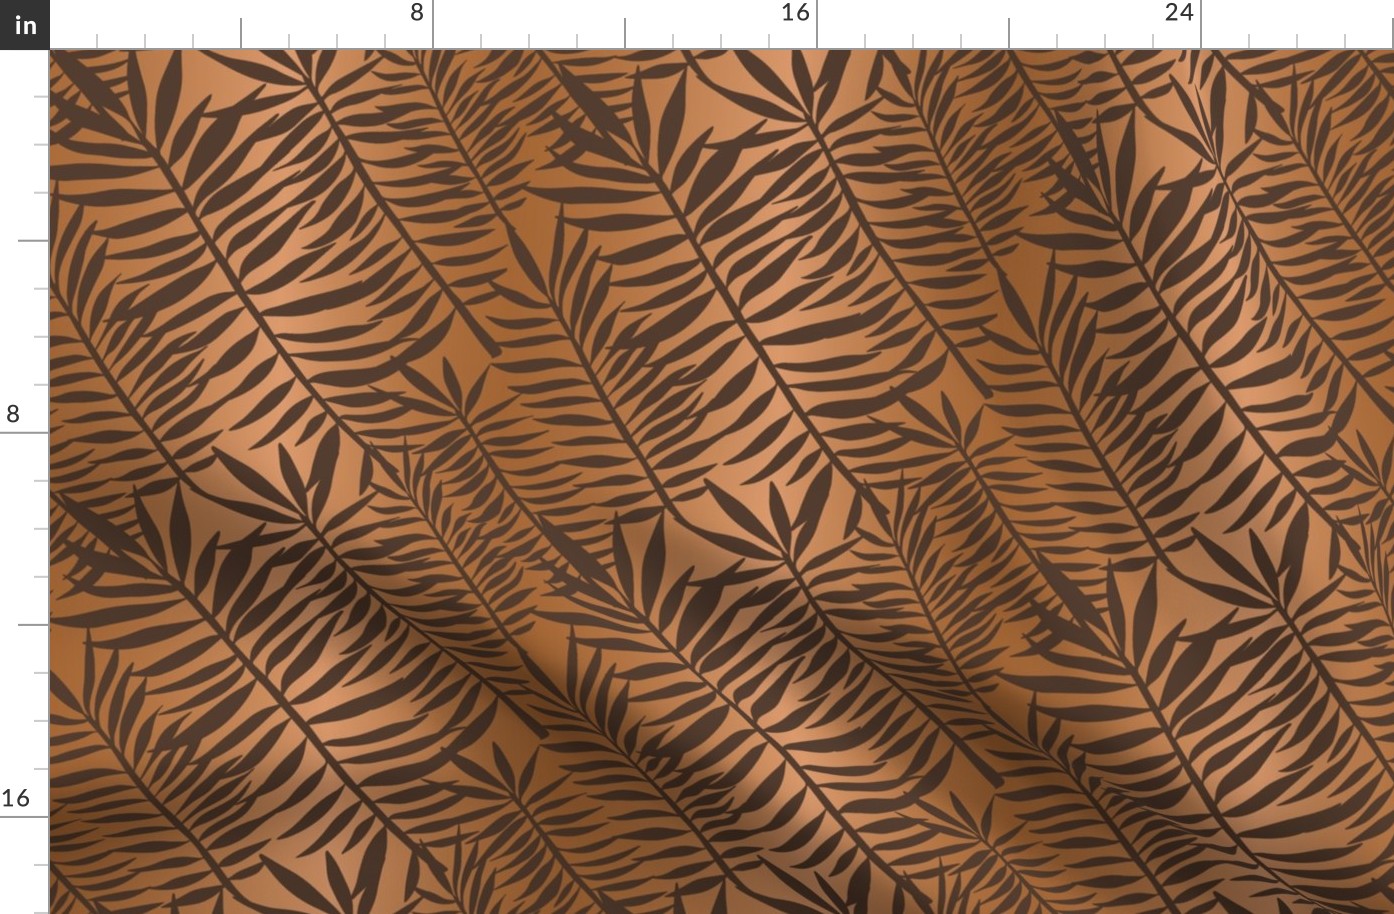 Palm frond tiger stripes on tan